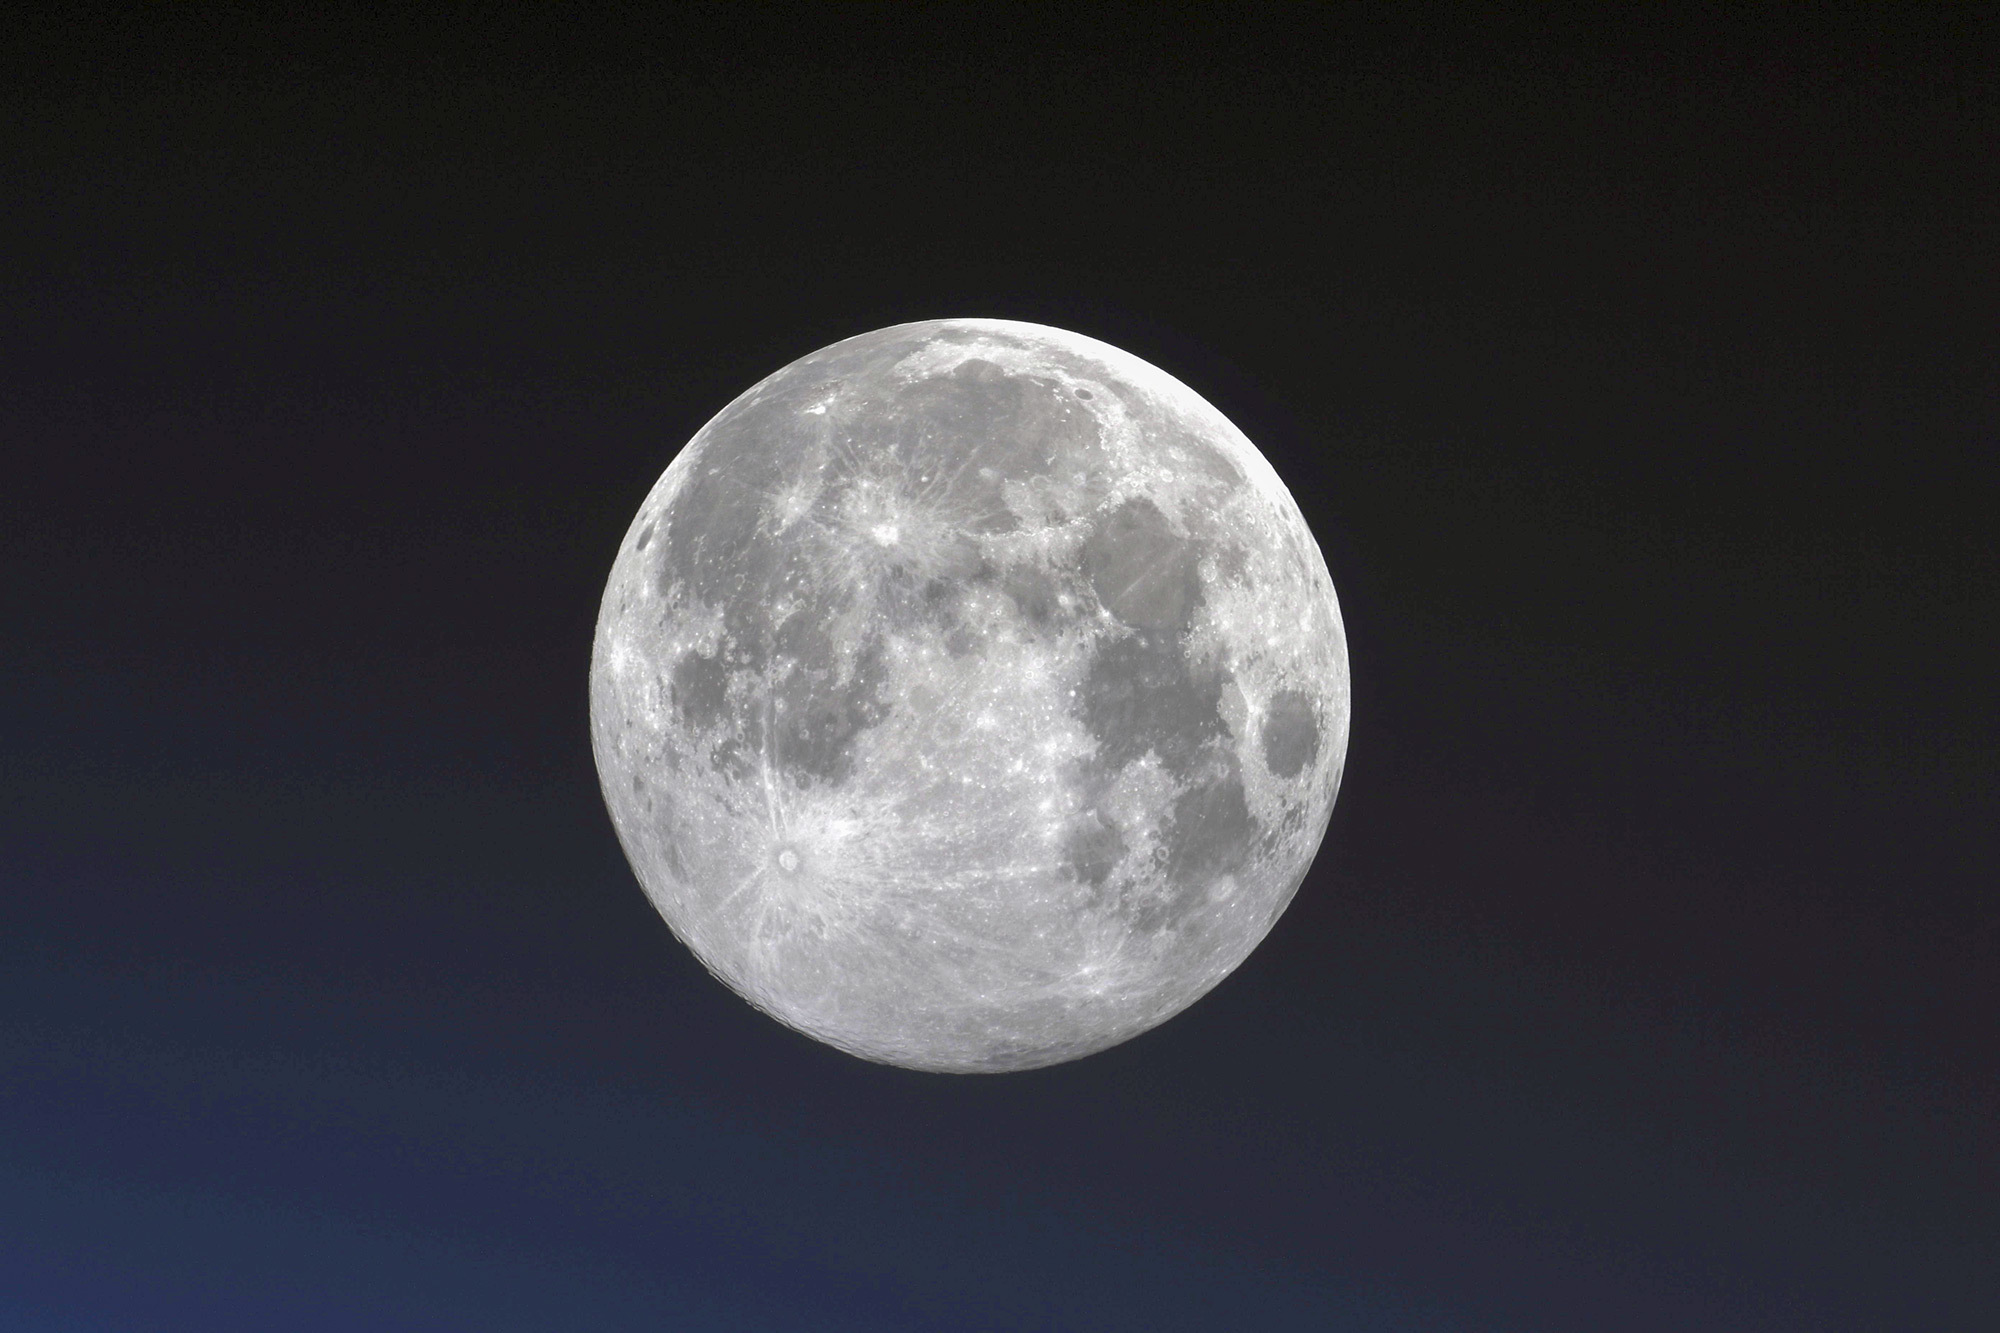 Фирма Interlune из США запускает добычу гелия-3 на Луне